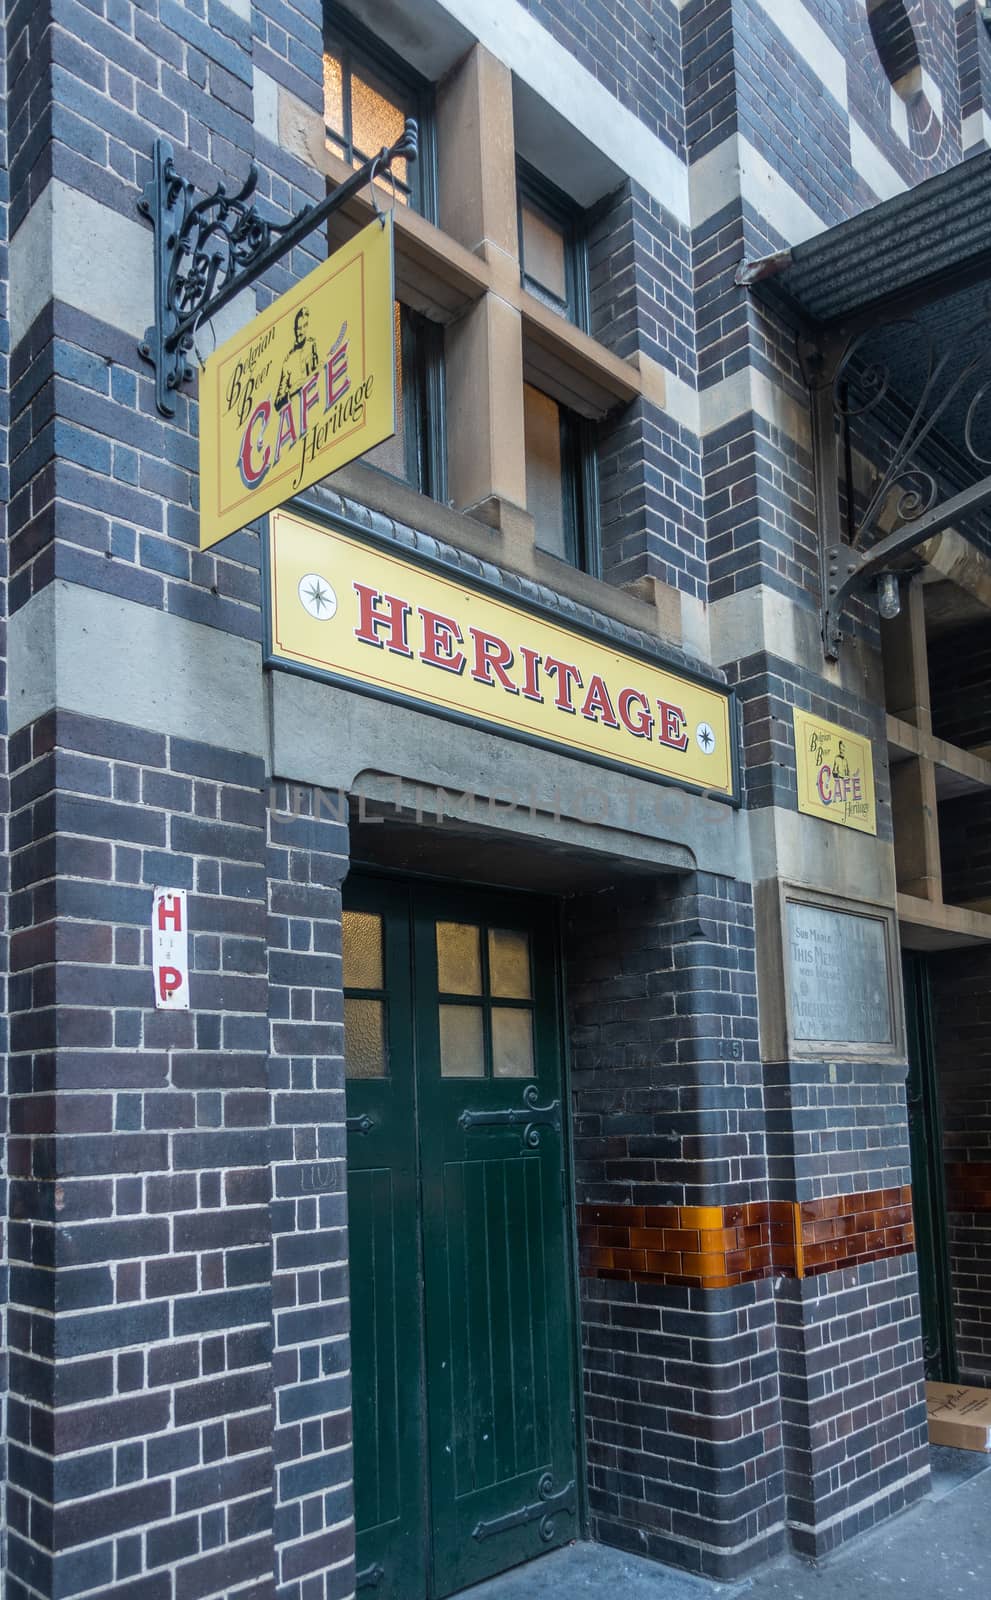 Belgian Beer Cafe Heritage in Harrington Street, Sydney Australi by Claudine